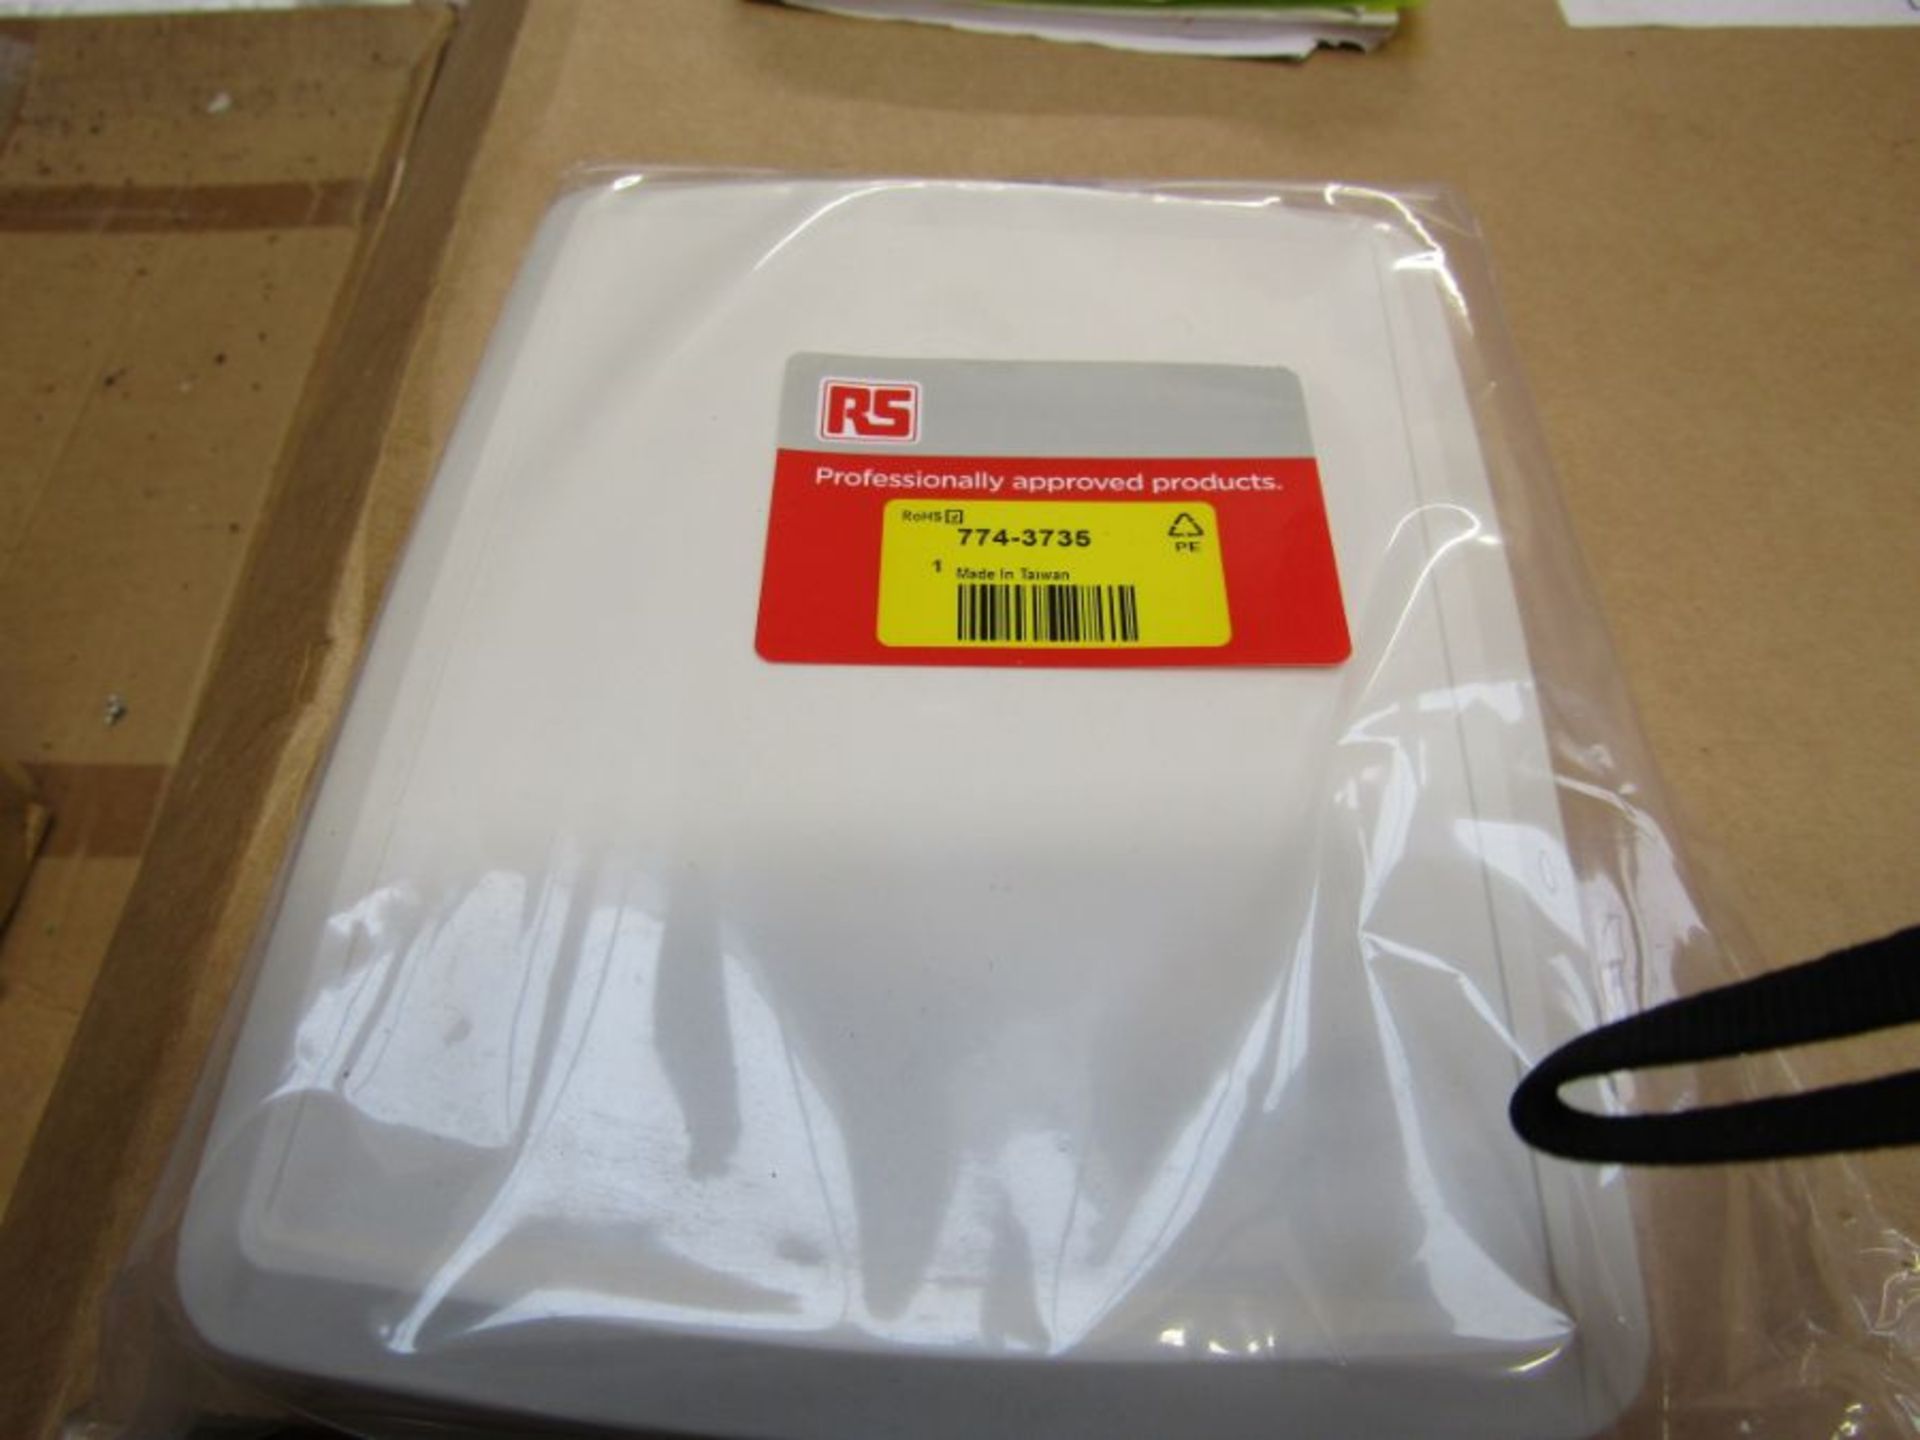 100 x Instrument Case / Enclosure ABS White, 190 x 150 x 30mm - 7743735